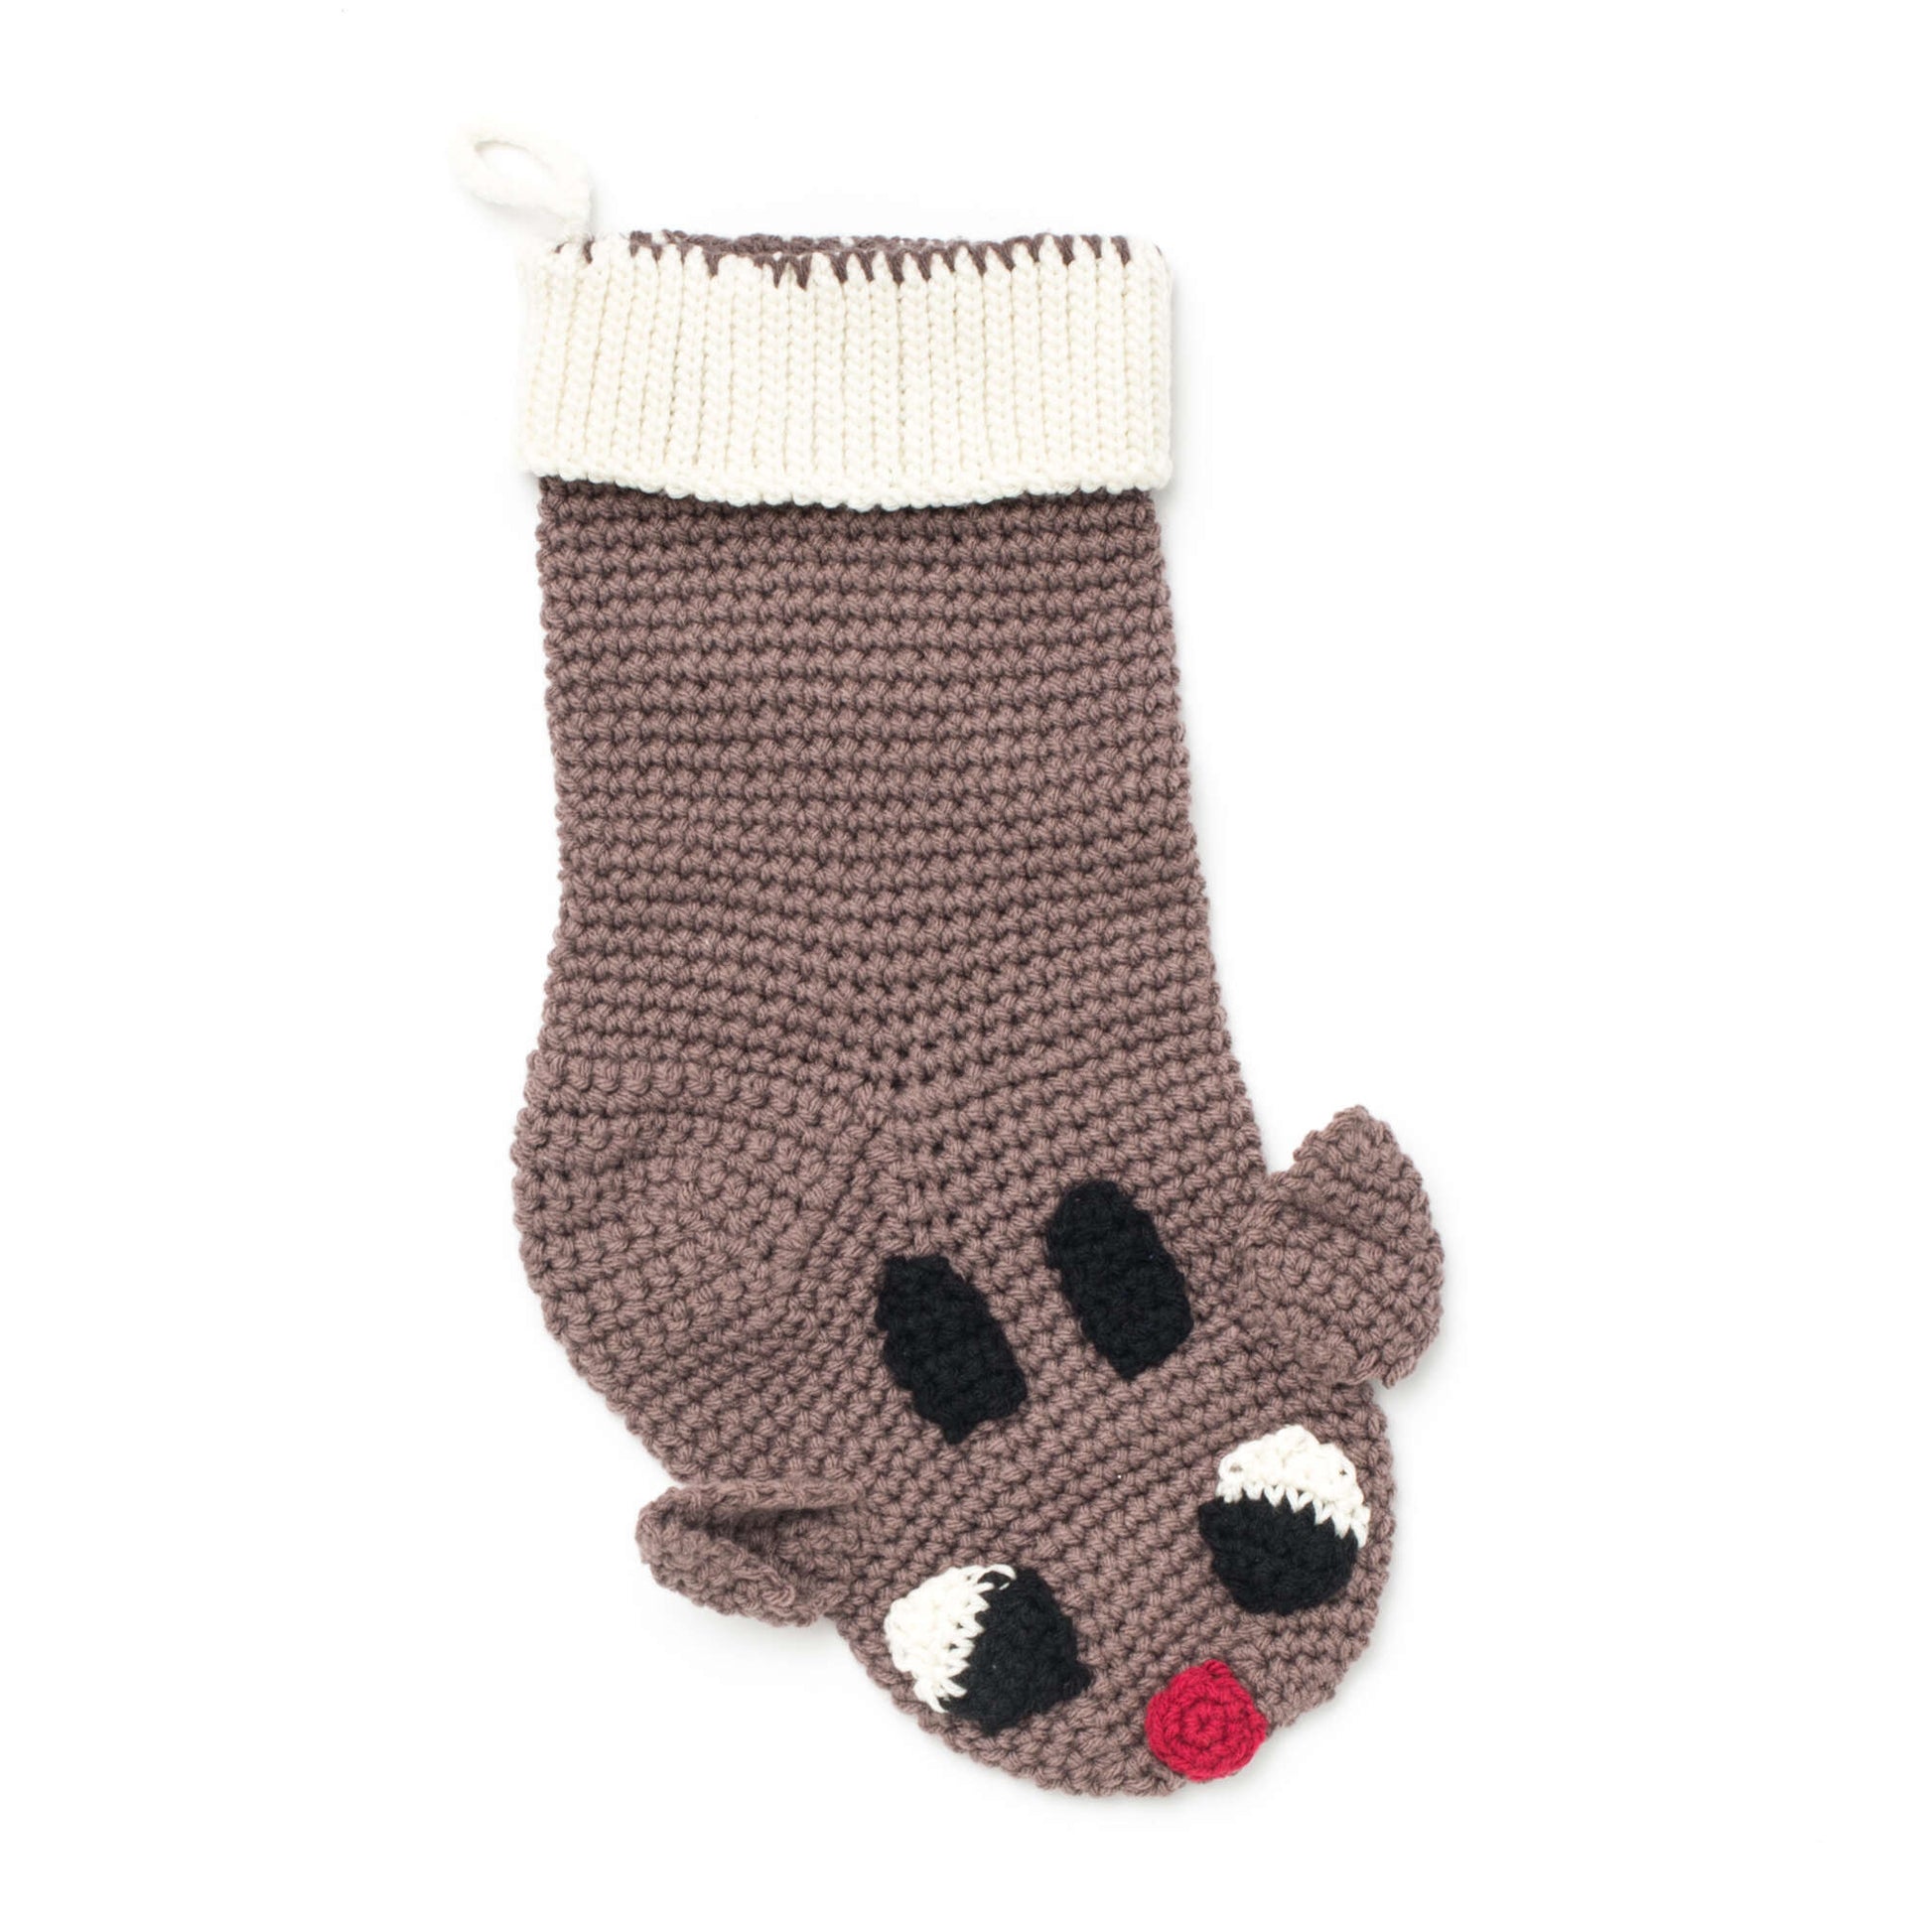 Bernat Reindeer Stocking Crochet Holiday made in Bernat Super Value yarn